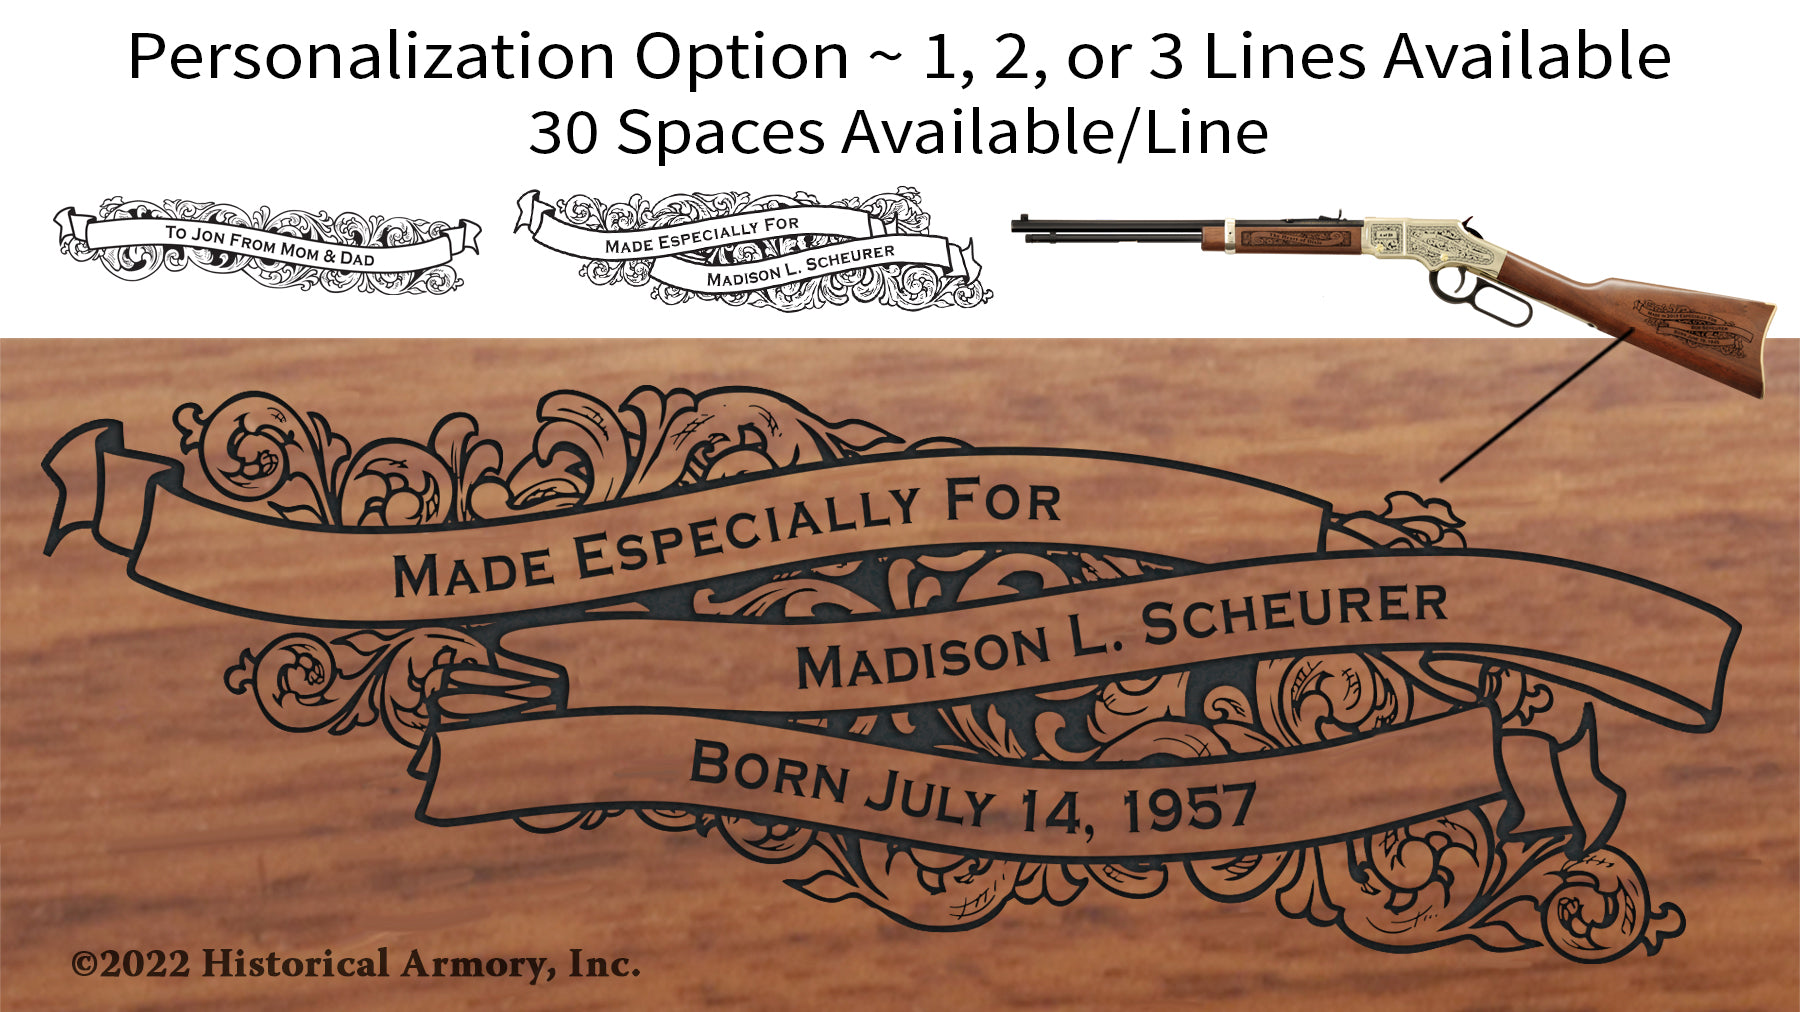 Juab County Utah Engraved Rifle Personalization